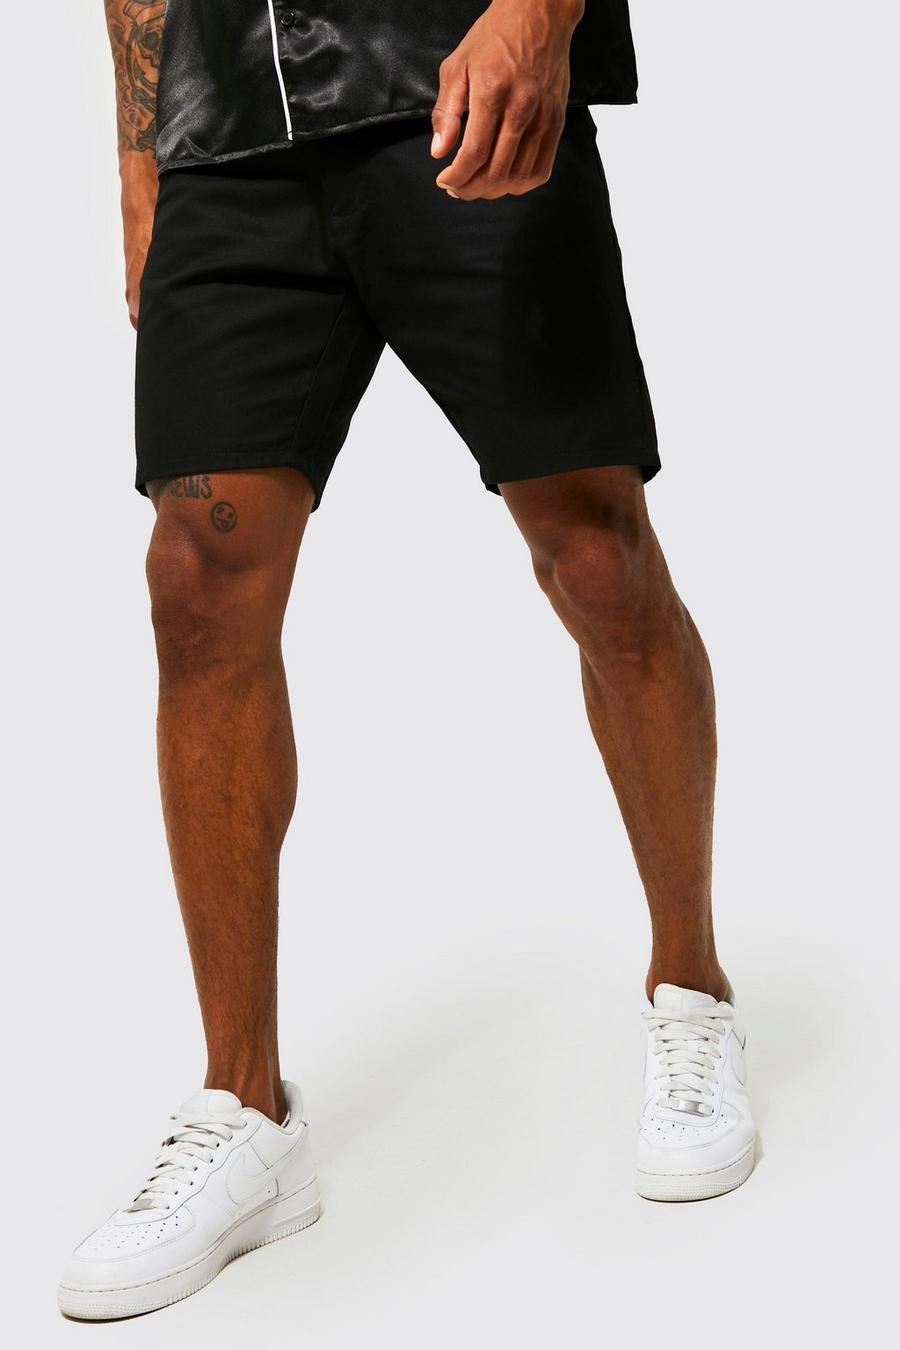 Pantaloncini Chino Skinny Fit, Black negro